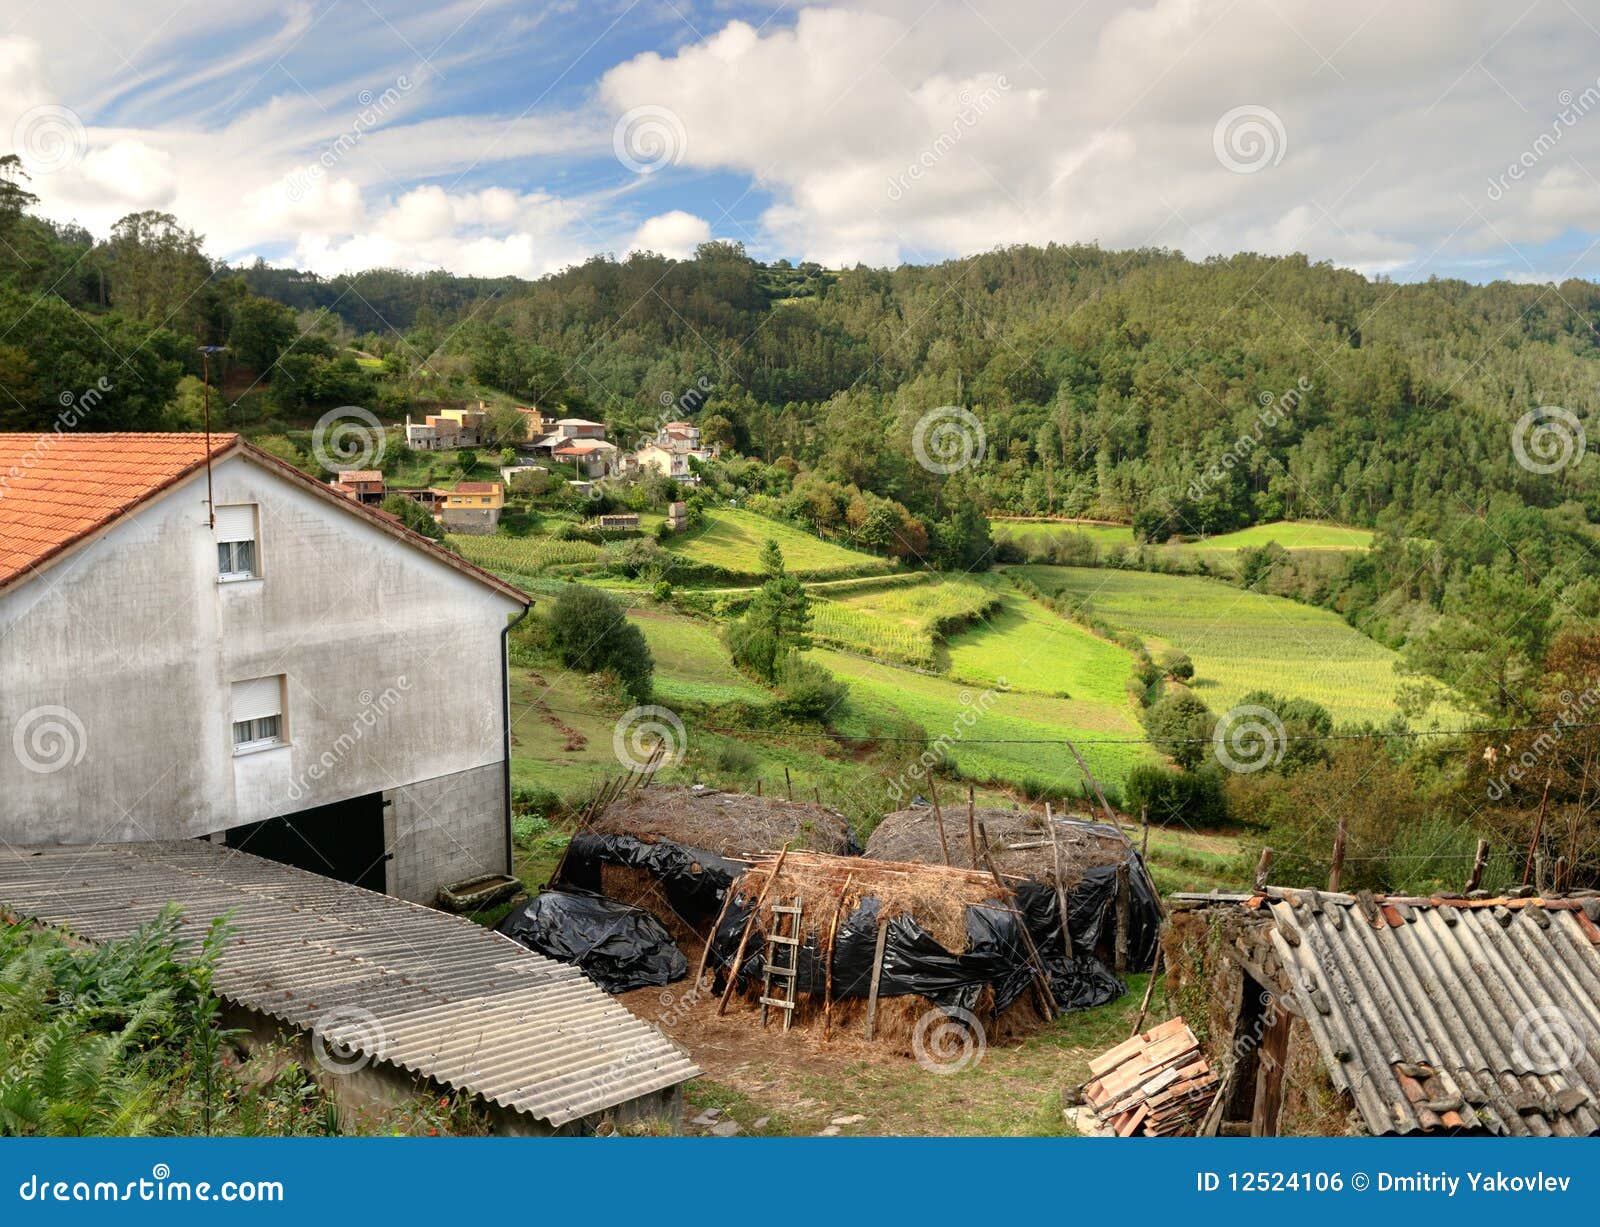 farm in mountains of galicia